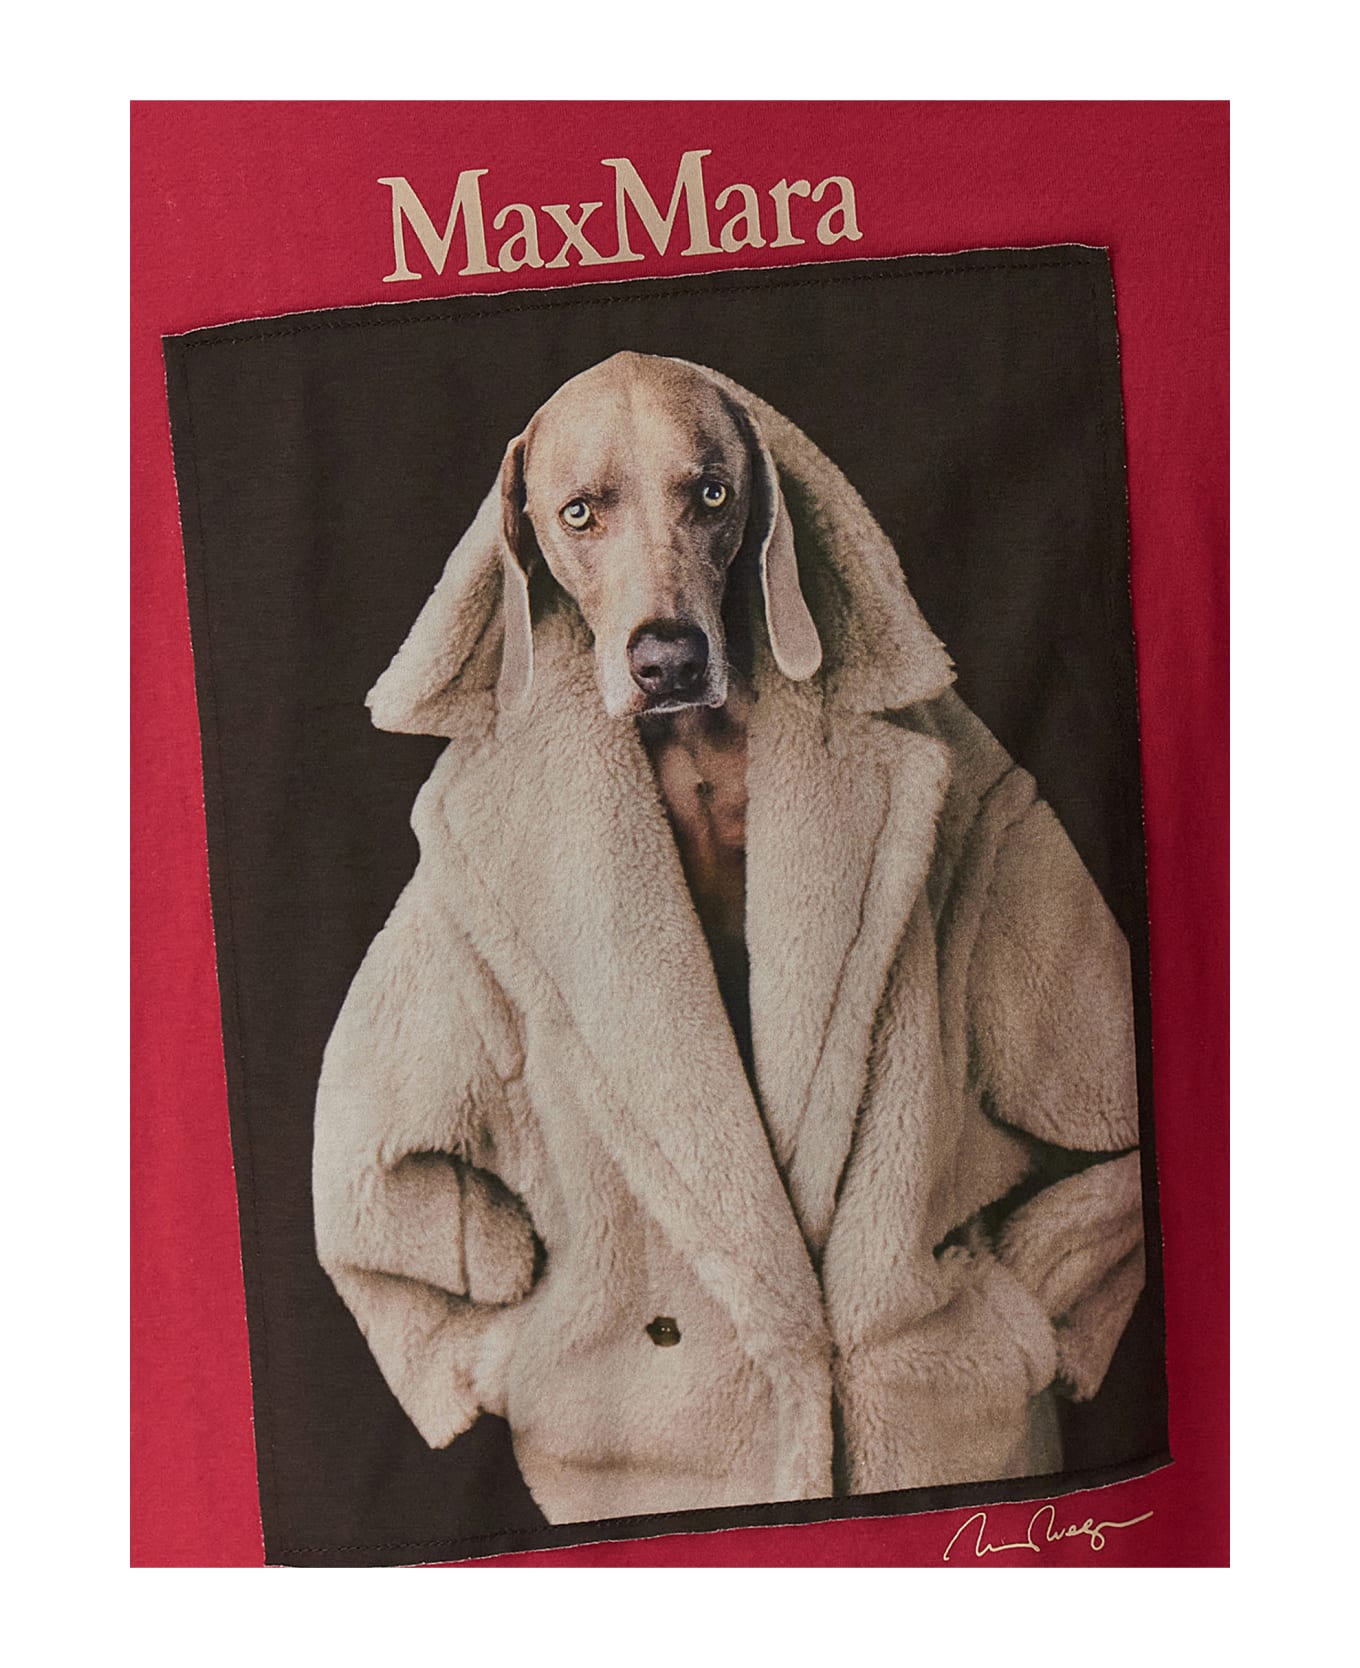 Max Mara Valido T-shirt - Fuchsia